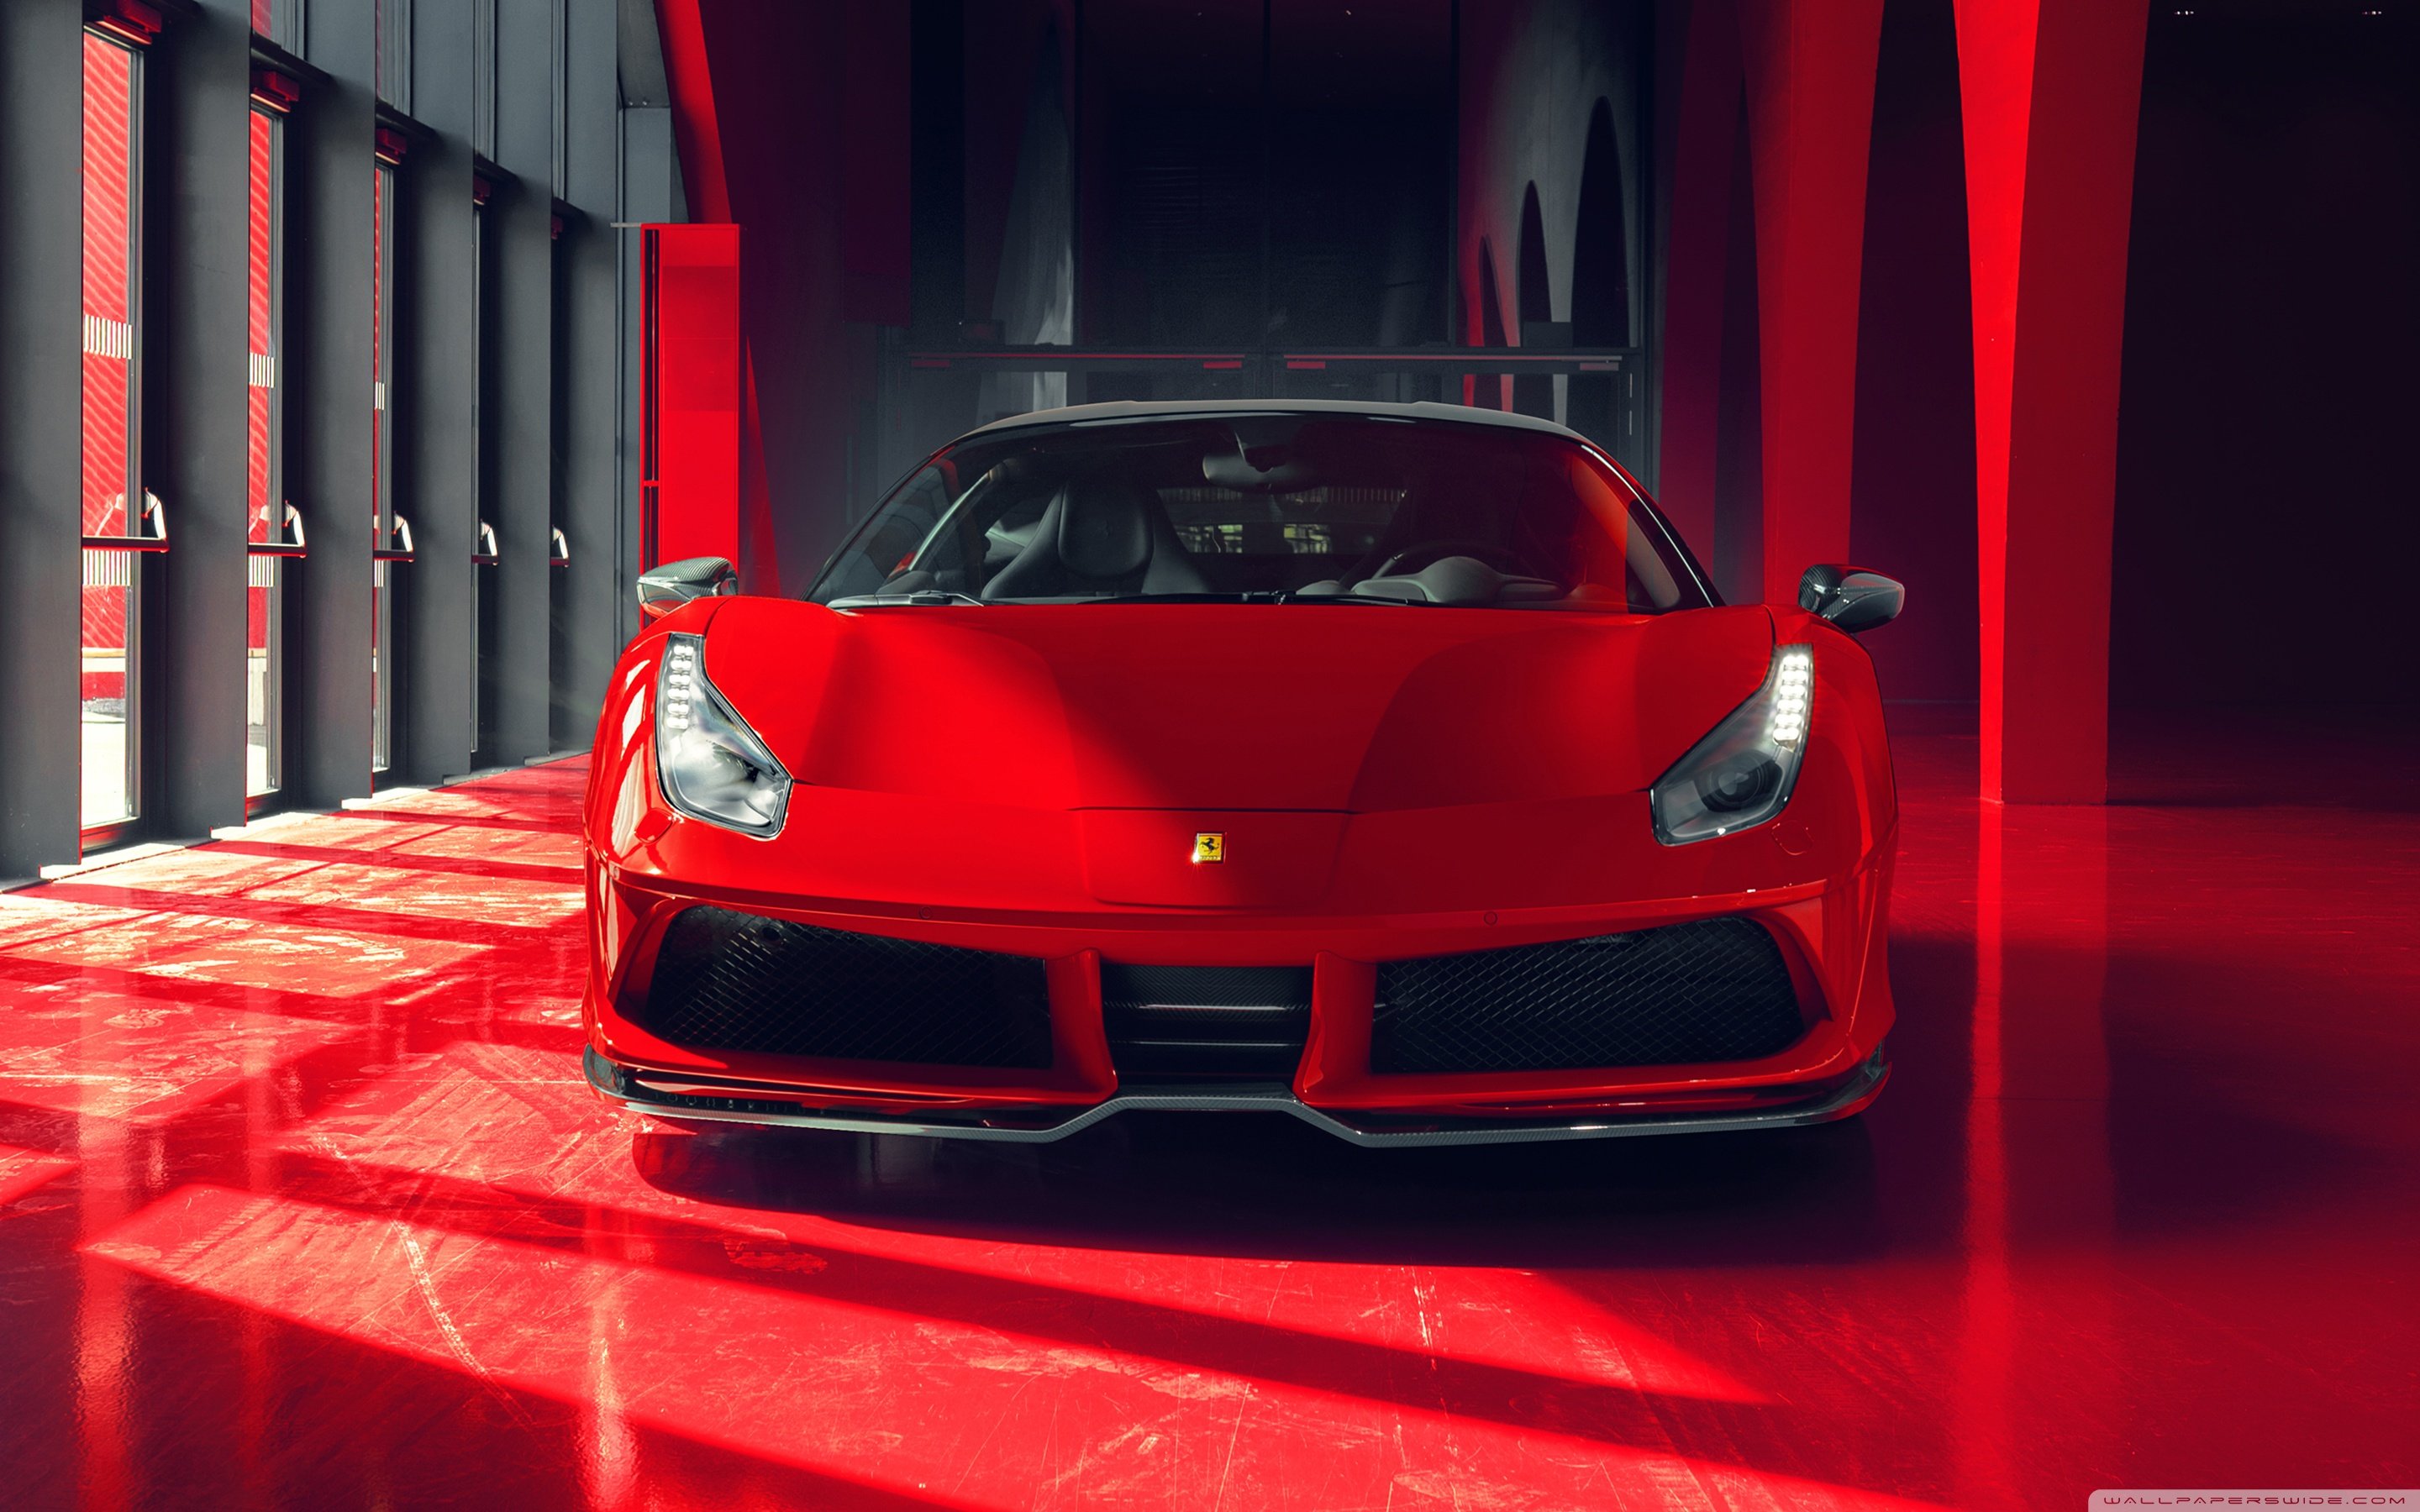 Cool Red Ferrari Car 2018 Ultra HD Desktop Background Wallpaper